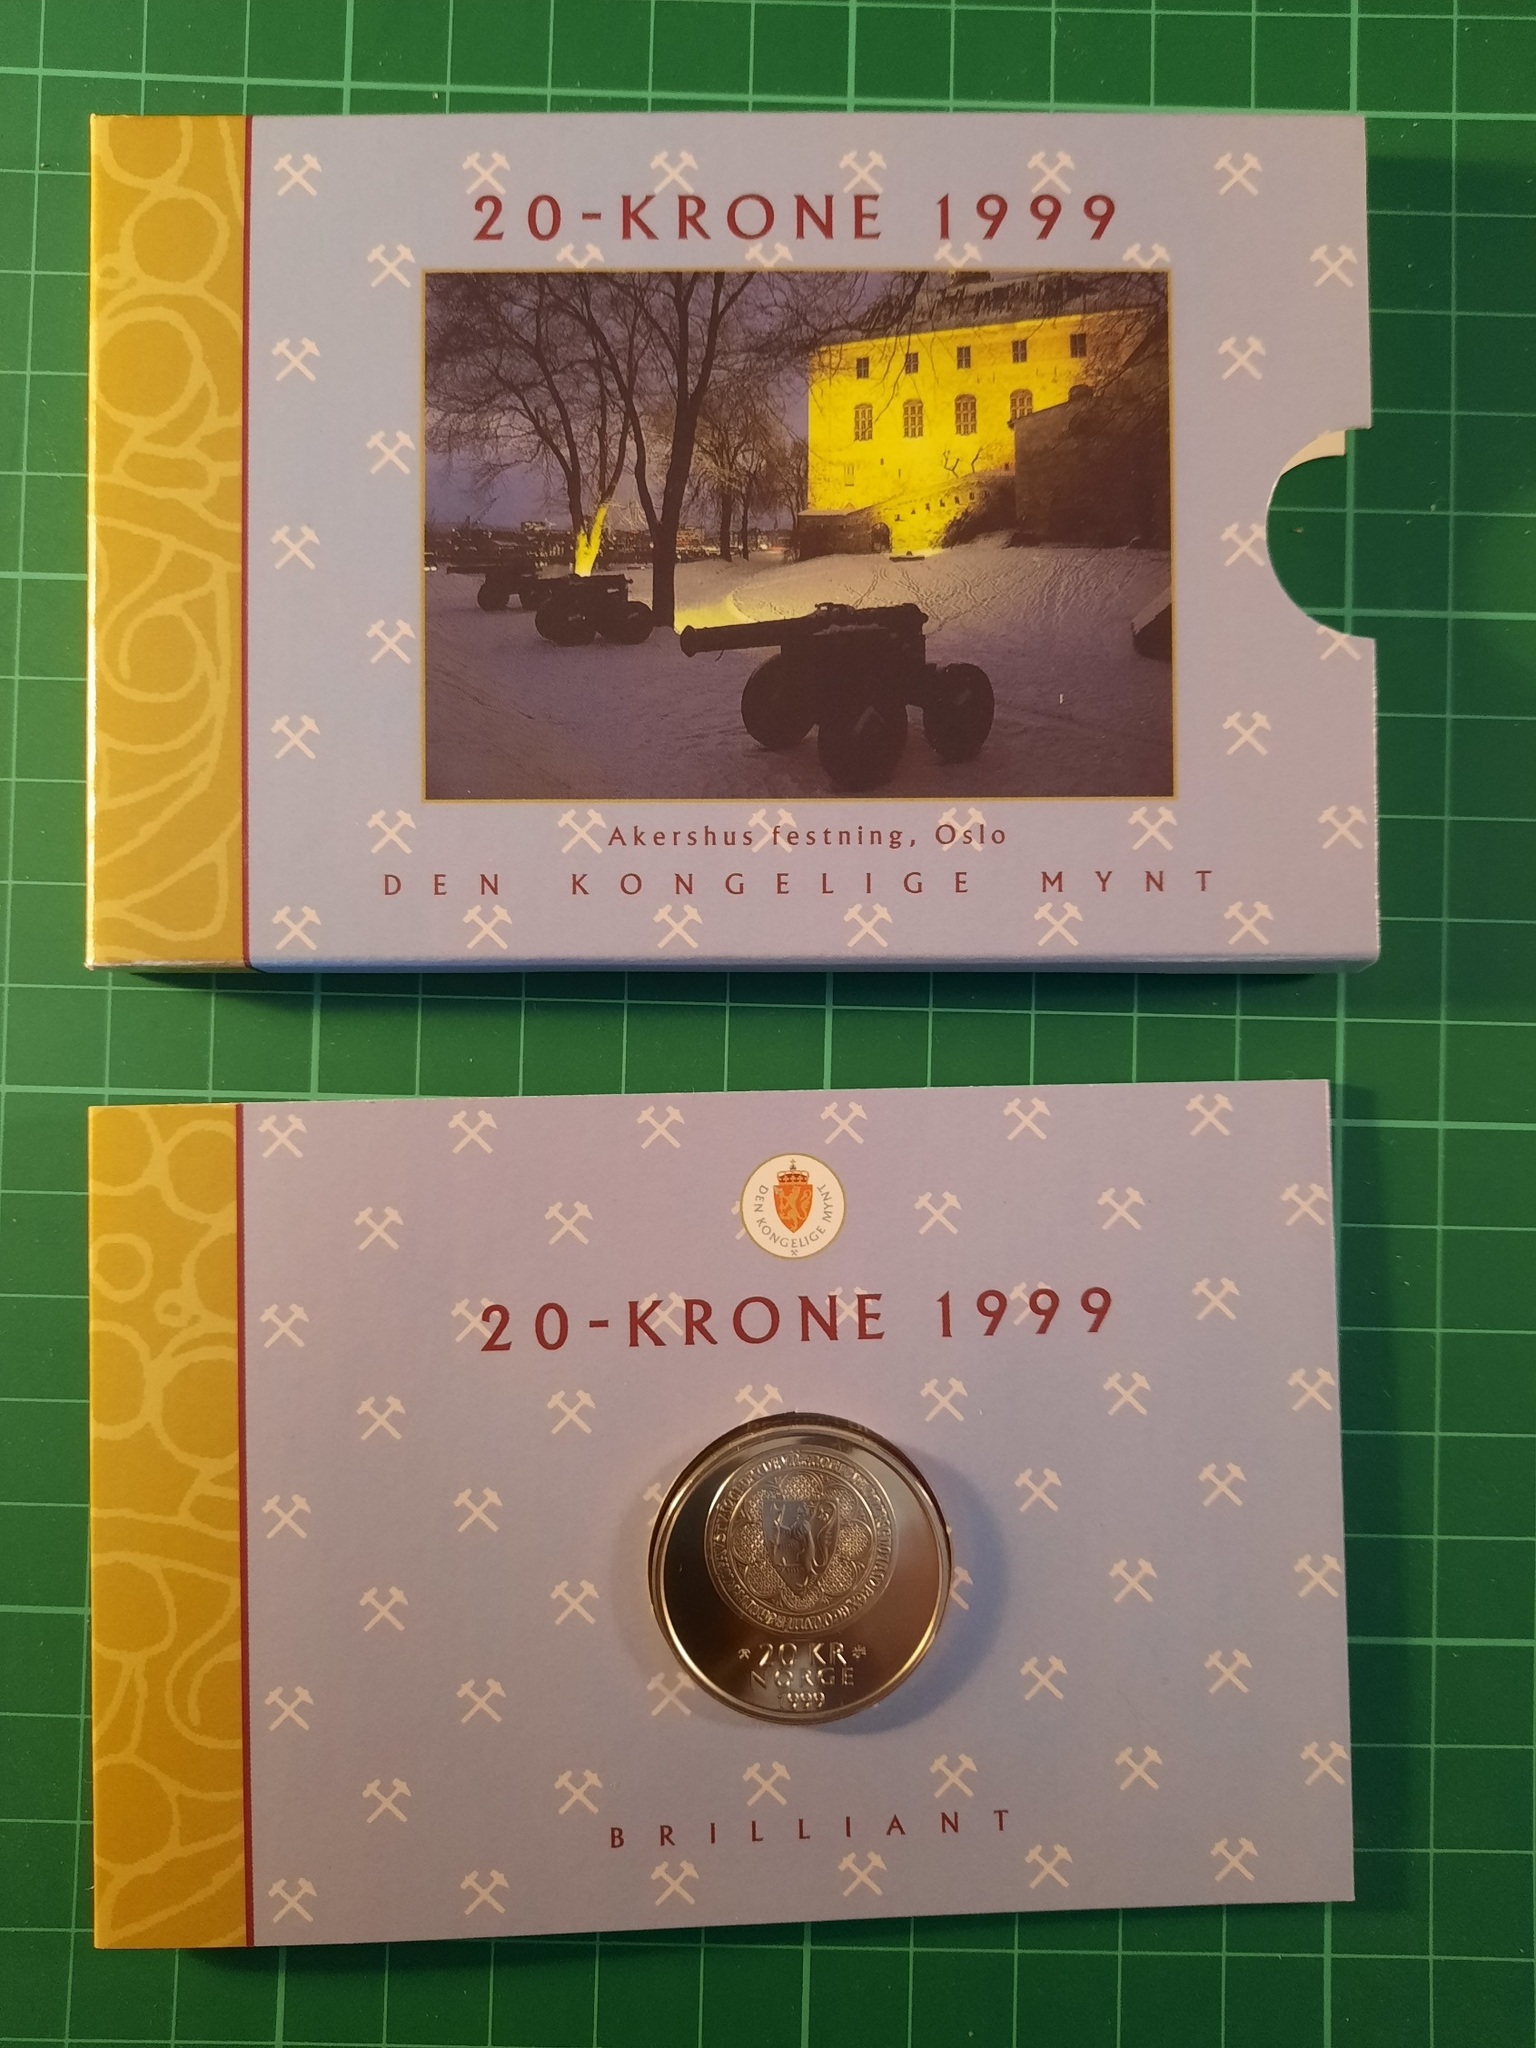 20 Krone 1999 (Akershus festning)